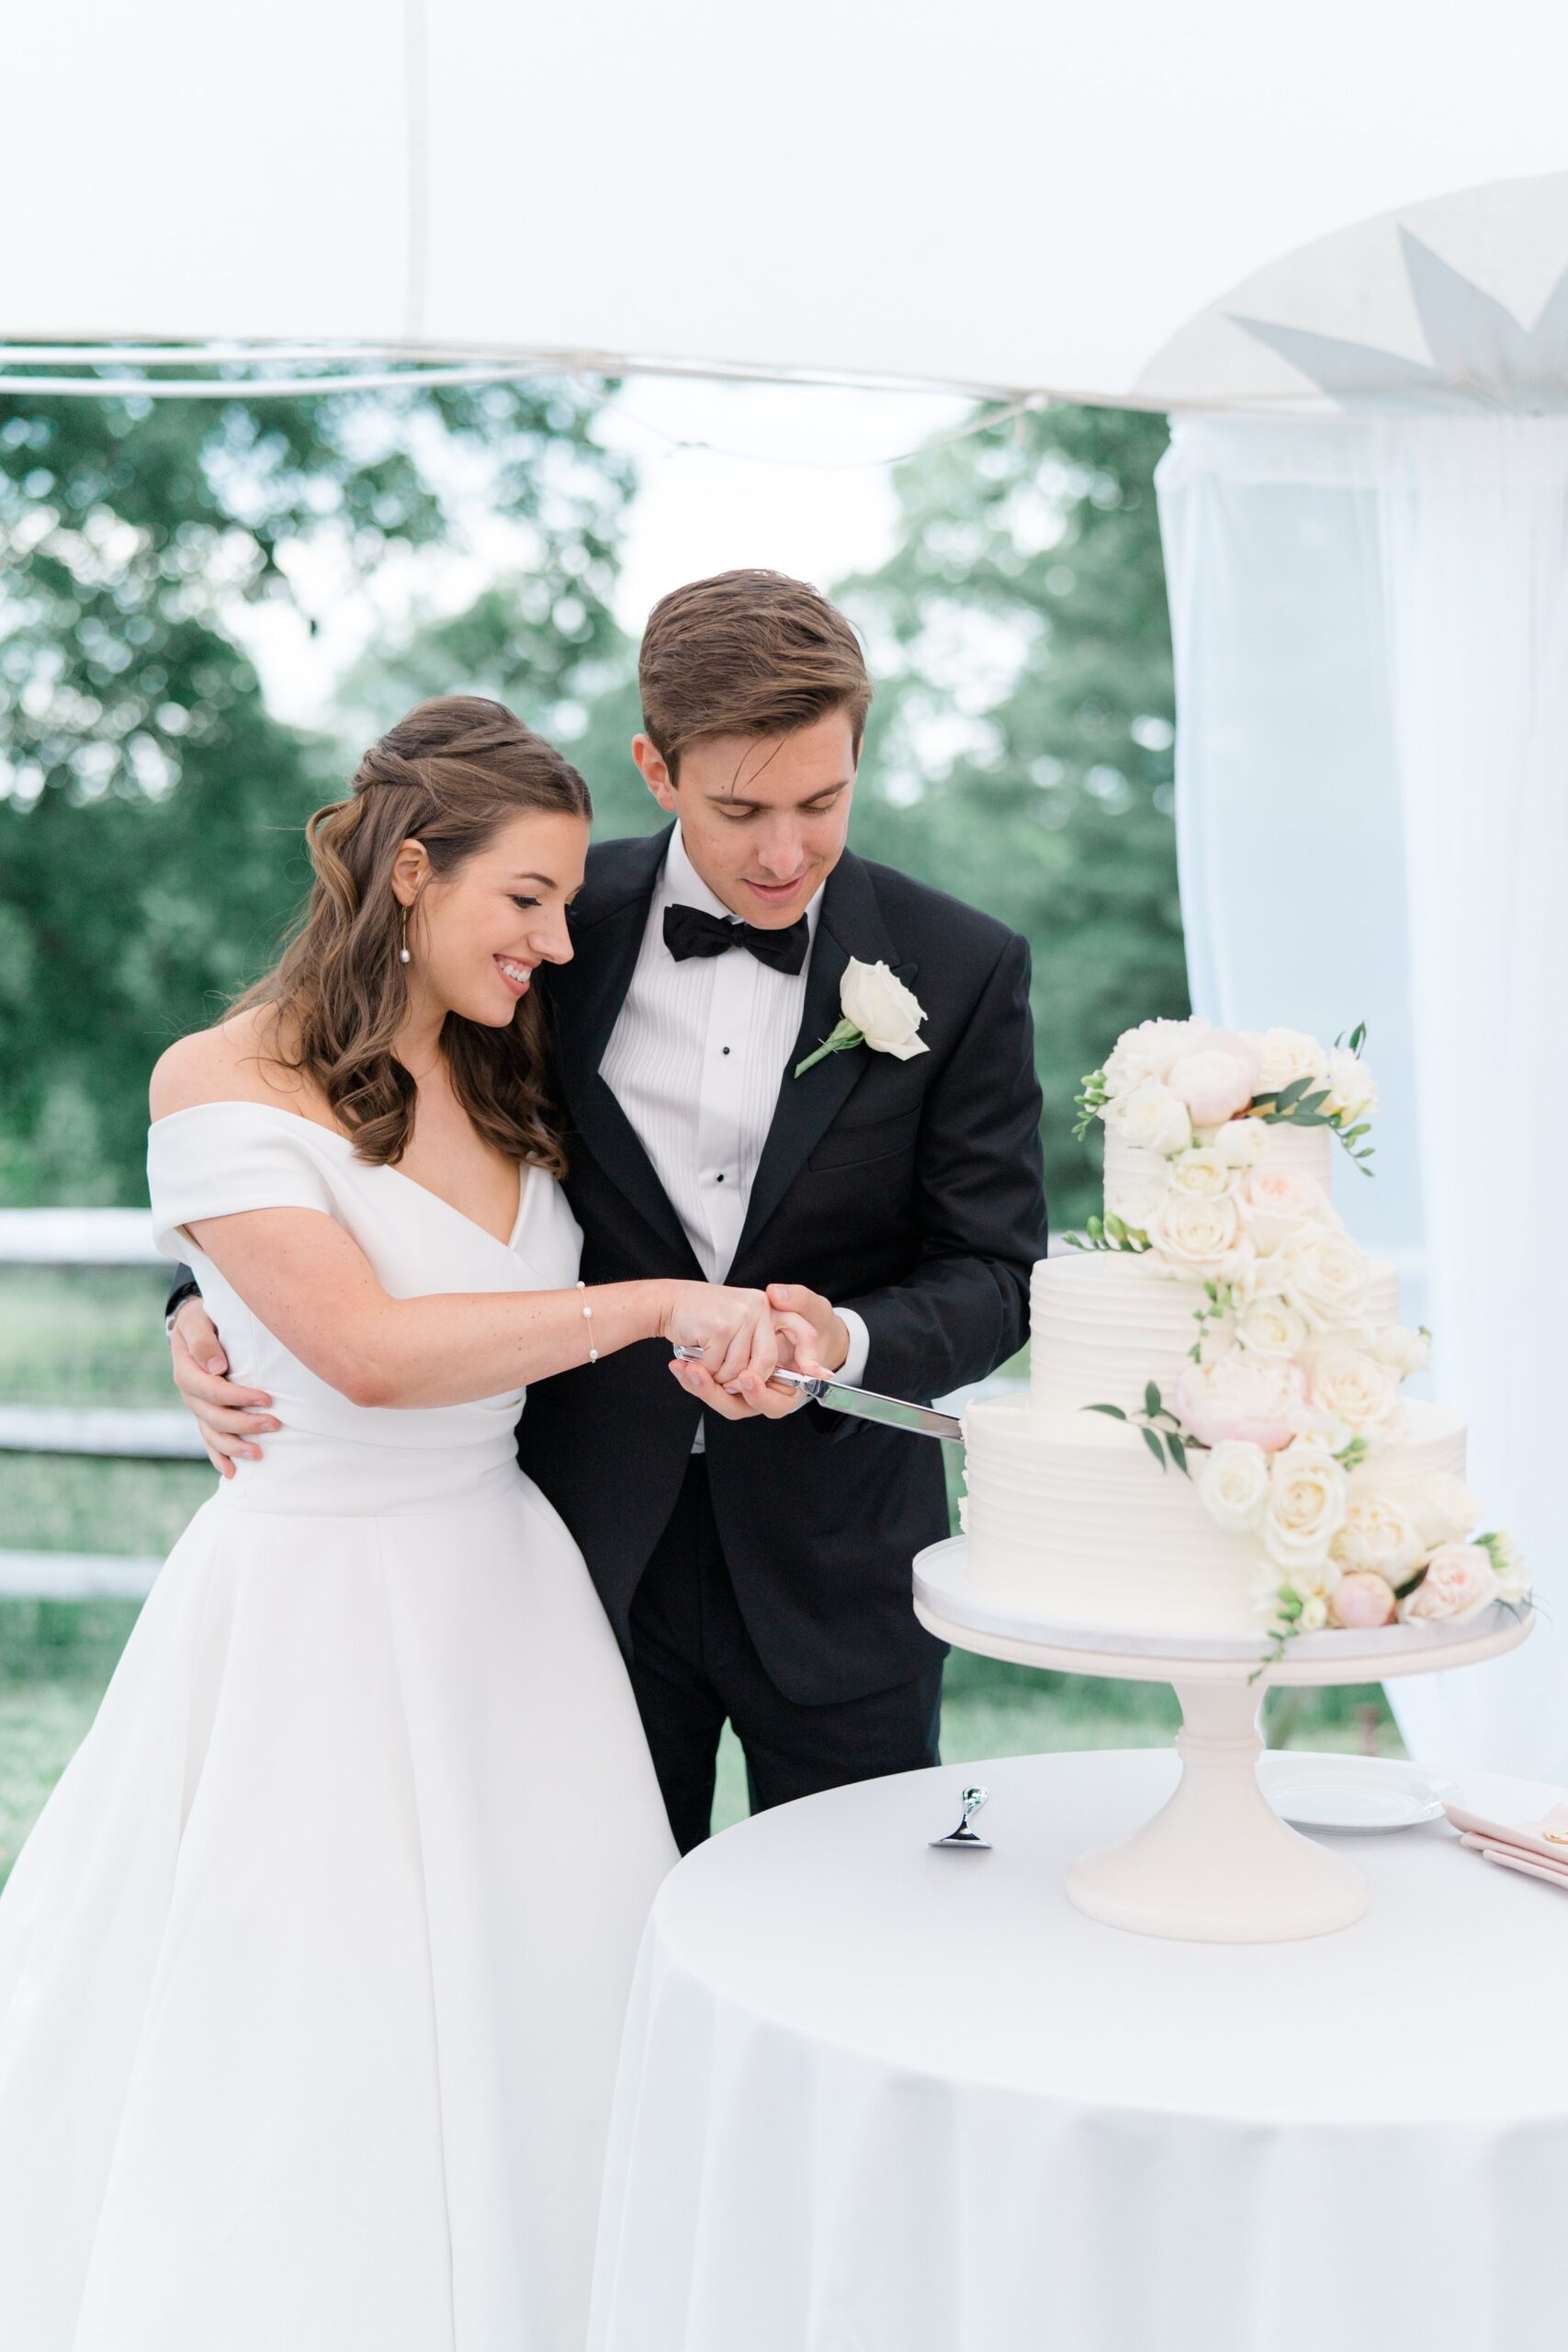 bride and groom cute wedding cake overflowing with flowers.